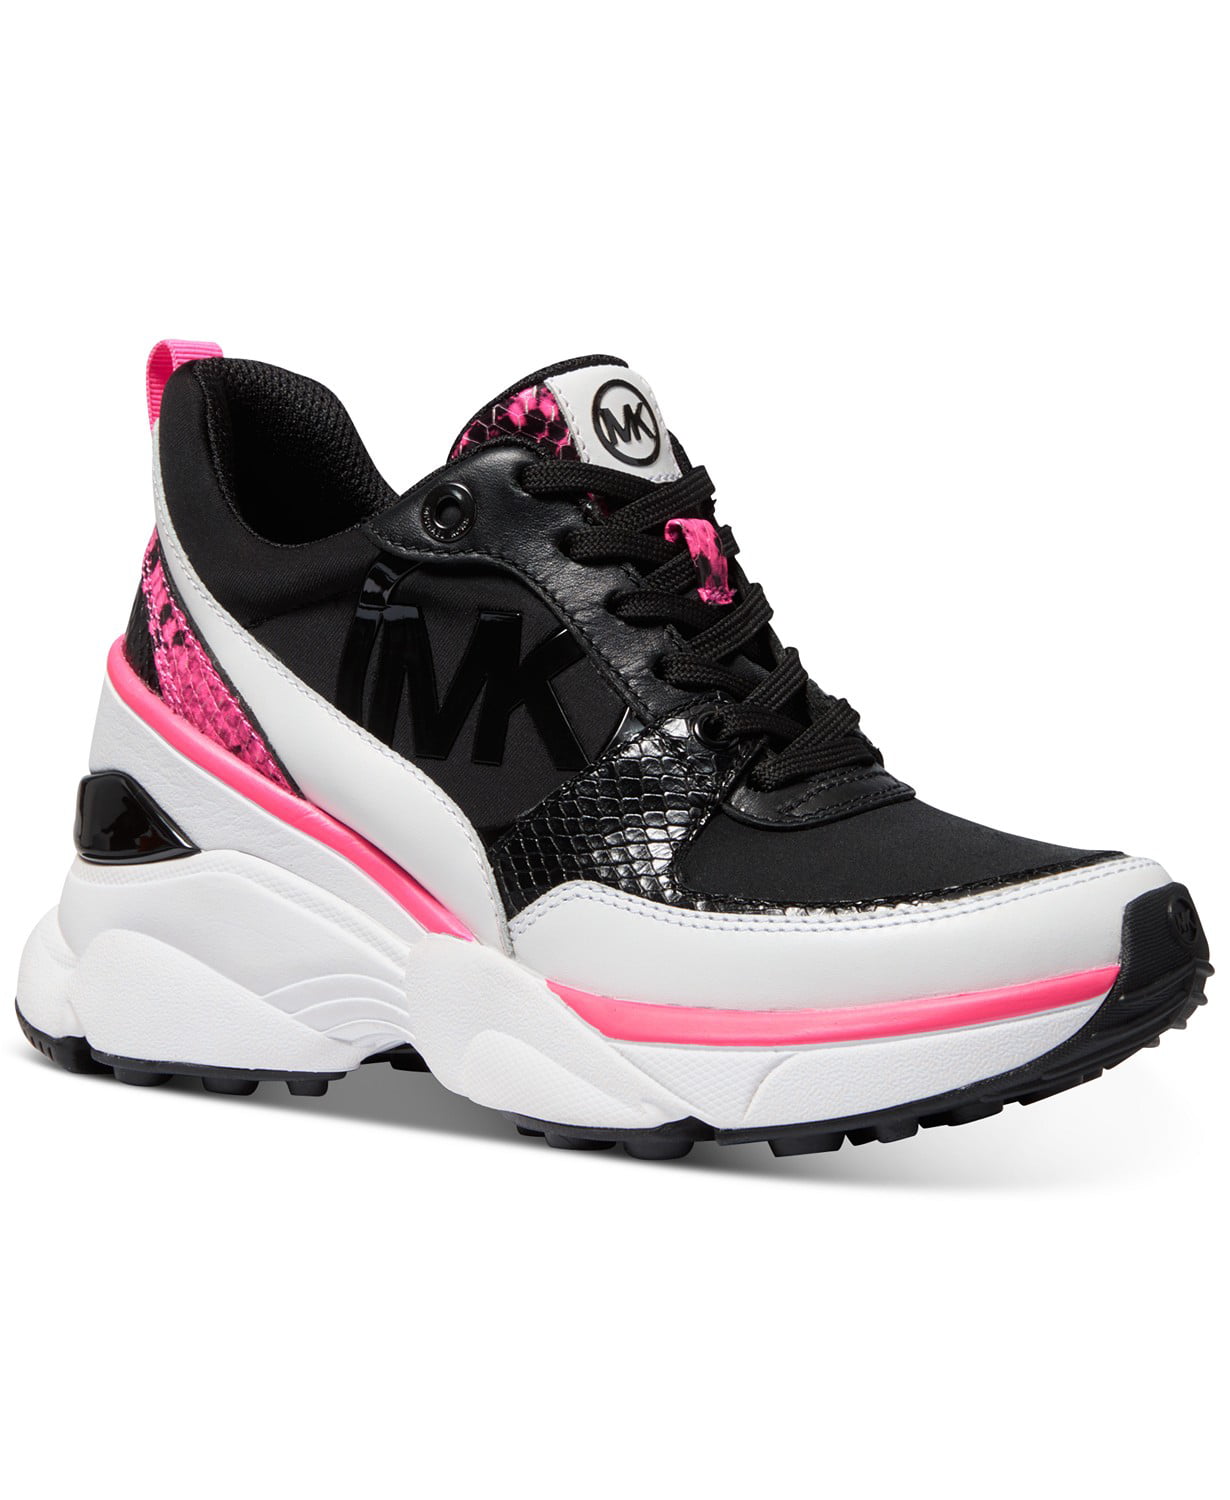 Michael Kors Women's Animal-Print Calf Hair Mickey Scuba Trainer Sneakers  Shoes Black/Pink (8) 